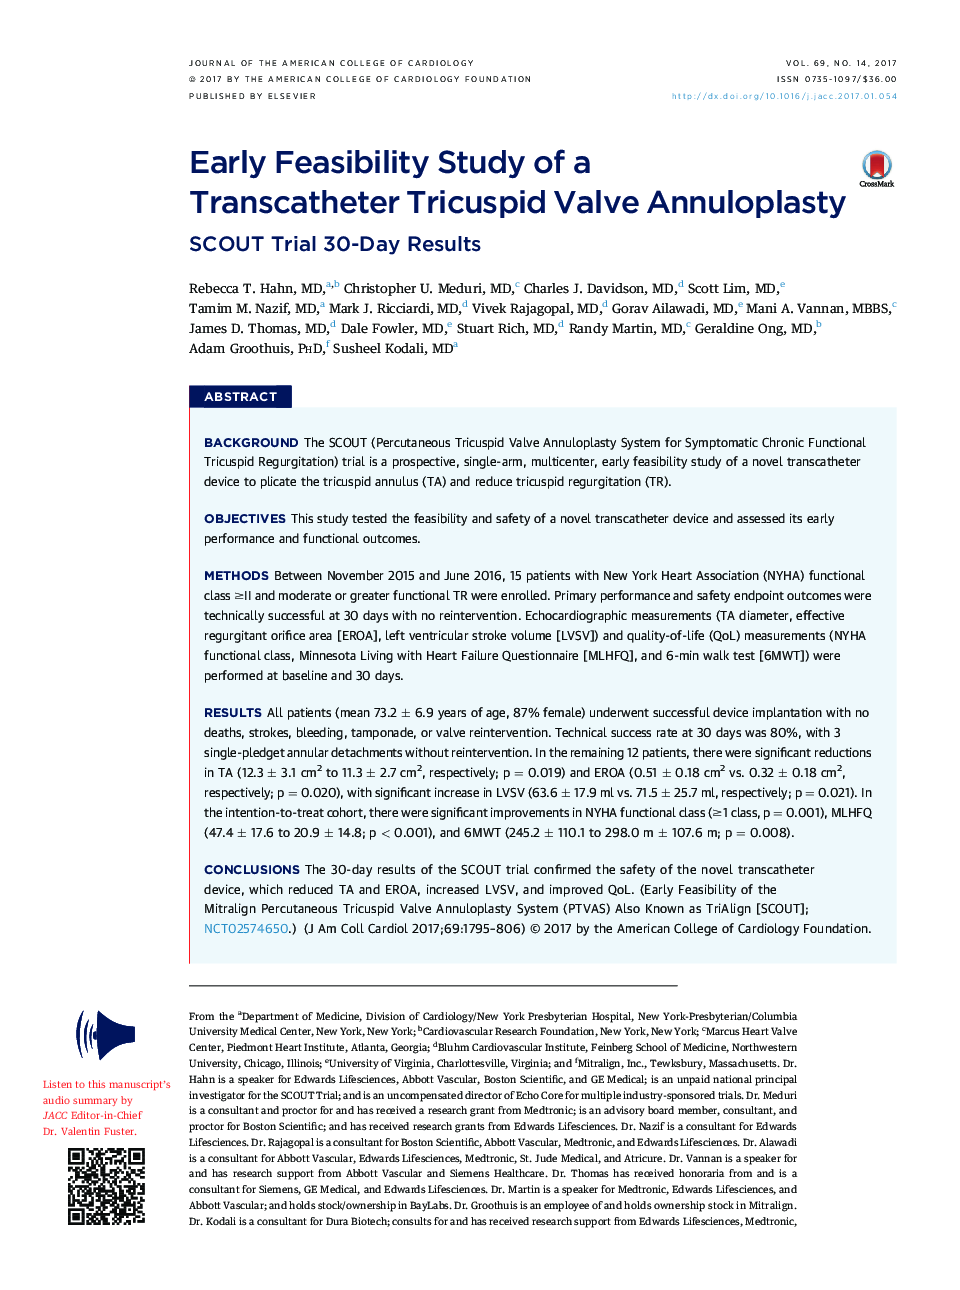 Early Feasibility Study of a TranscatheterÂ Tricuspid Valve Annuloplasty